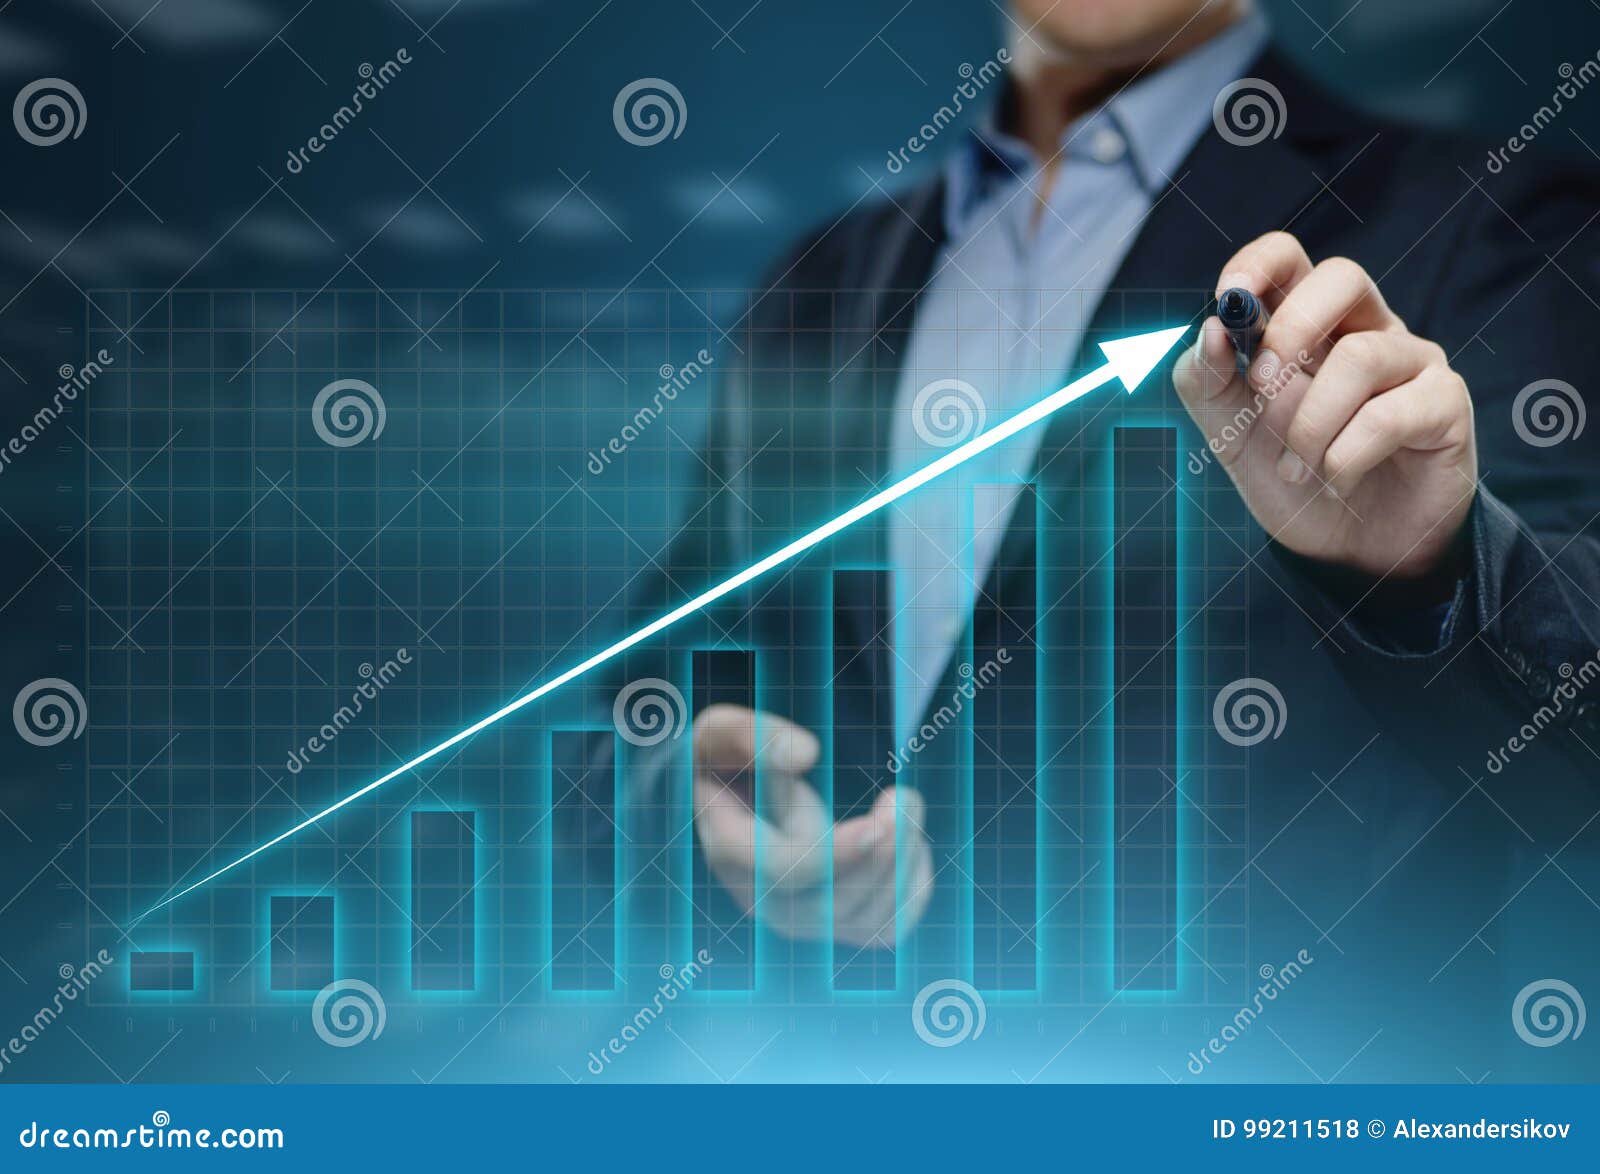 financial graph. stock market chart. forex investment business internet technology concept